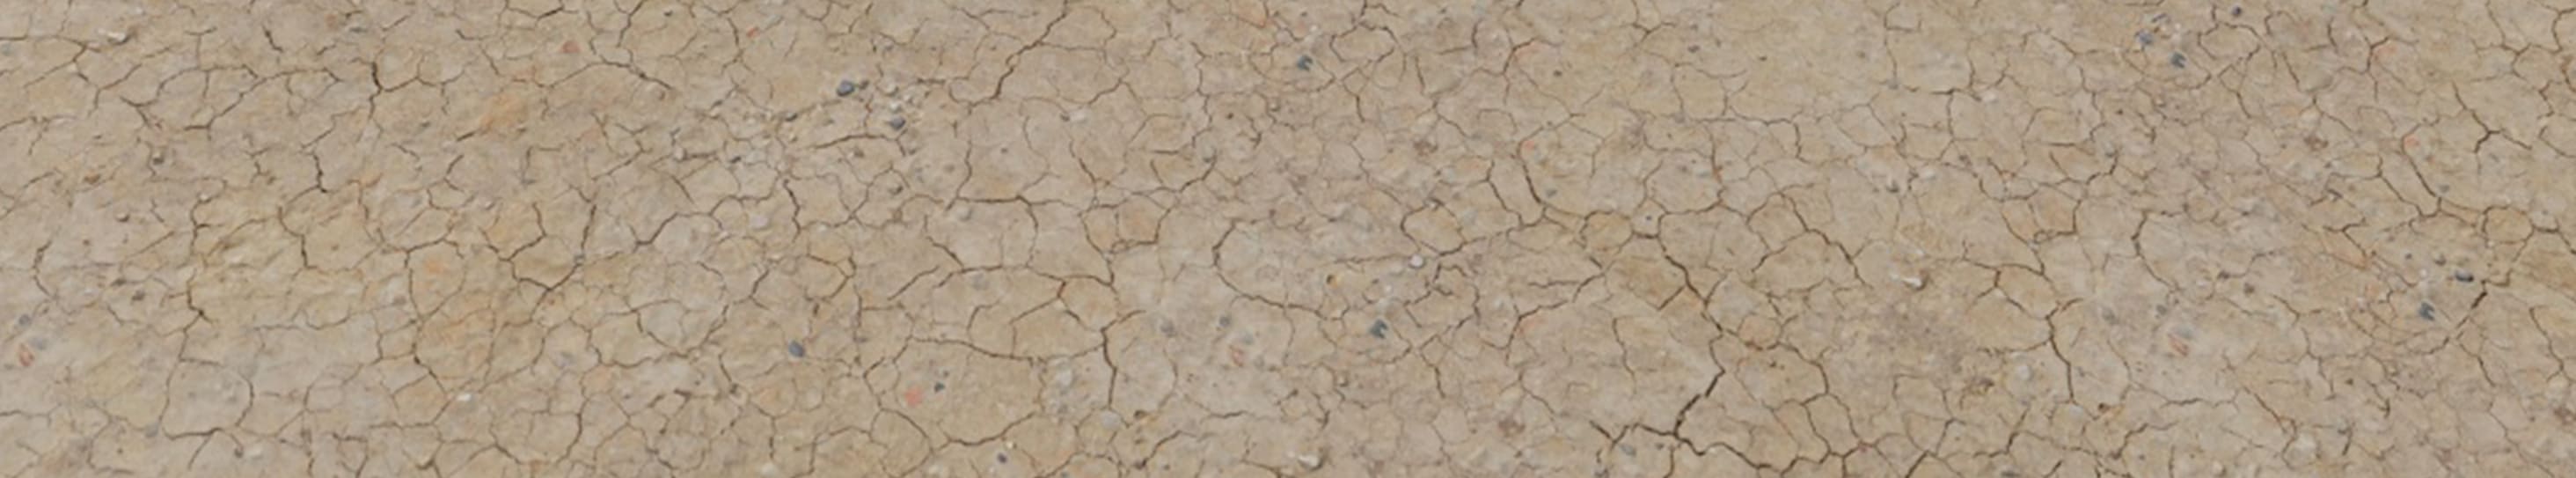 1K, 2K, 4K, 8K, 16K Mud Soil Ground Texture